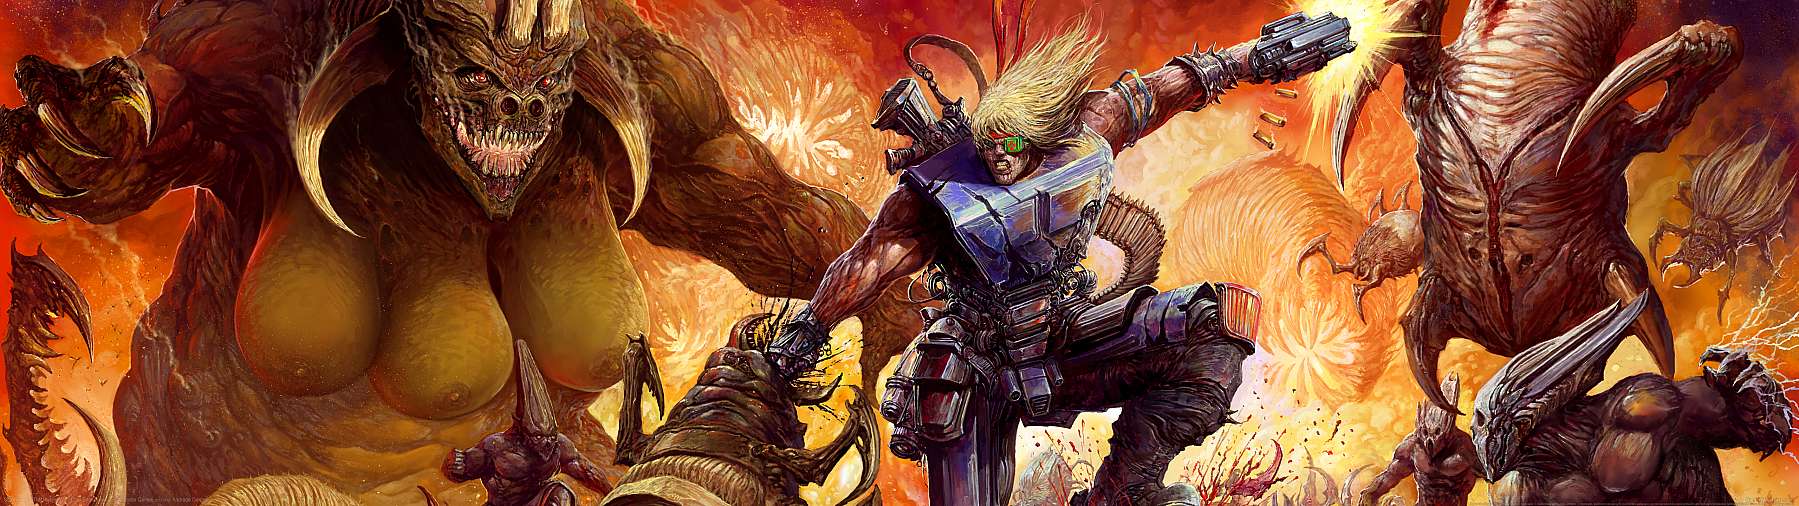 SturmFront - The Mutant War: Ubel Edition superwide fond d'cran 01